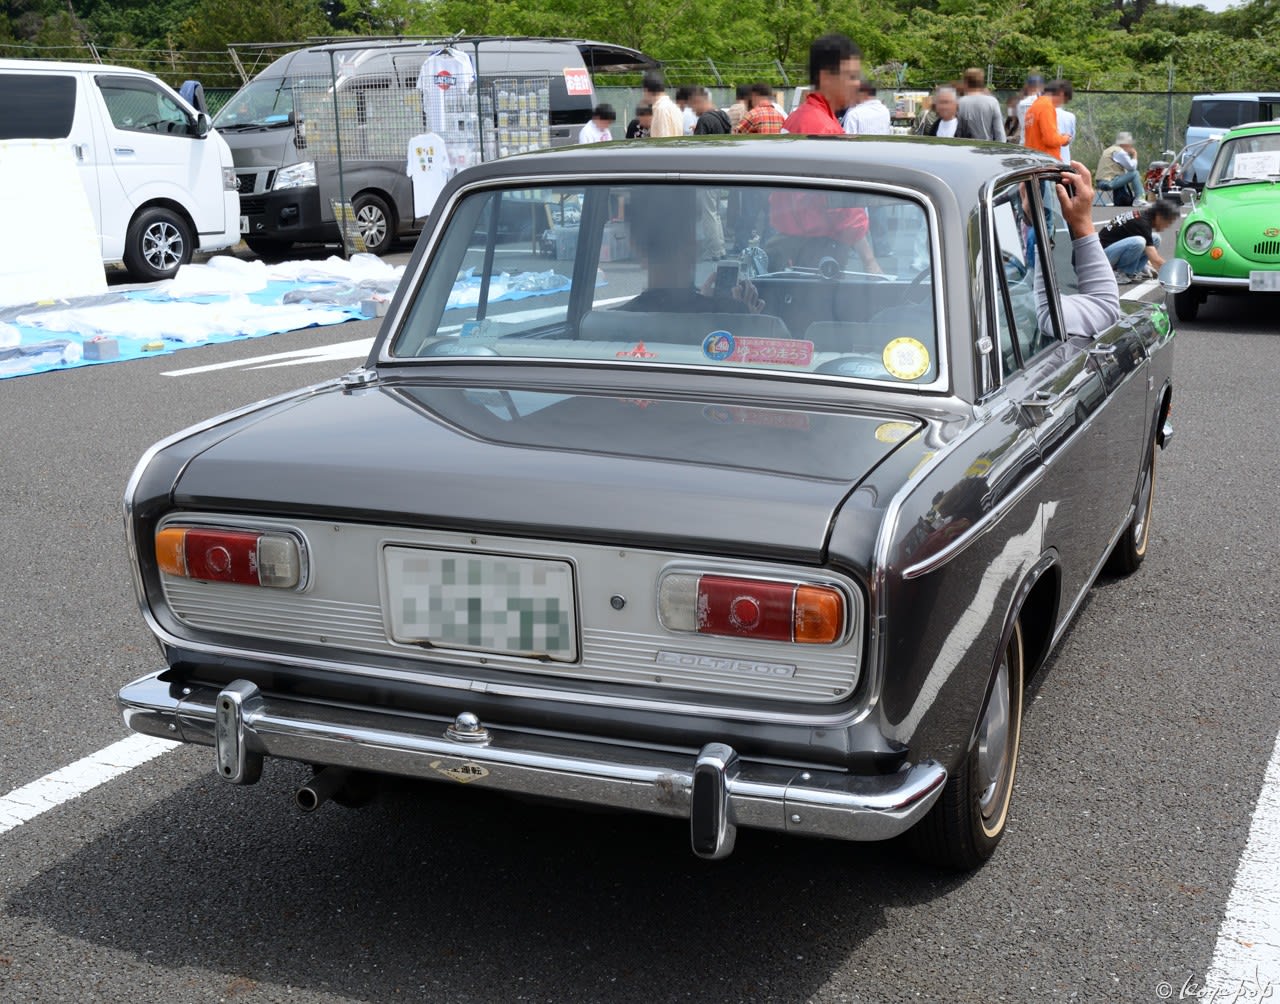 Mitsubishi Colt 1500 1965- つり目4灯デザインを採用した三菱 コルト 1500 - ☆ BEAUTIFUL CARS OF  THE '60s +1 ☆